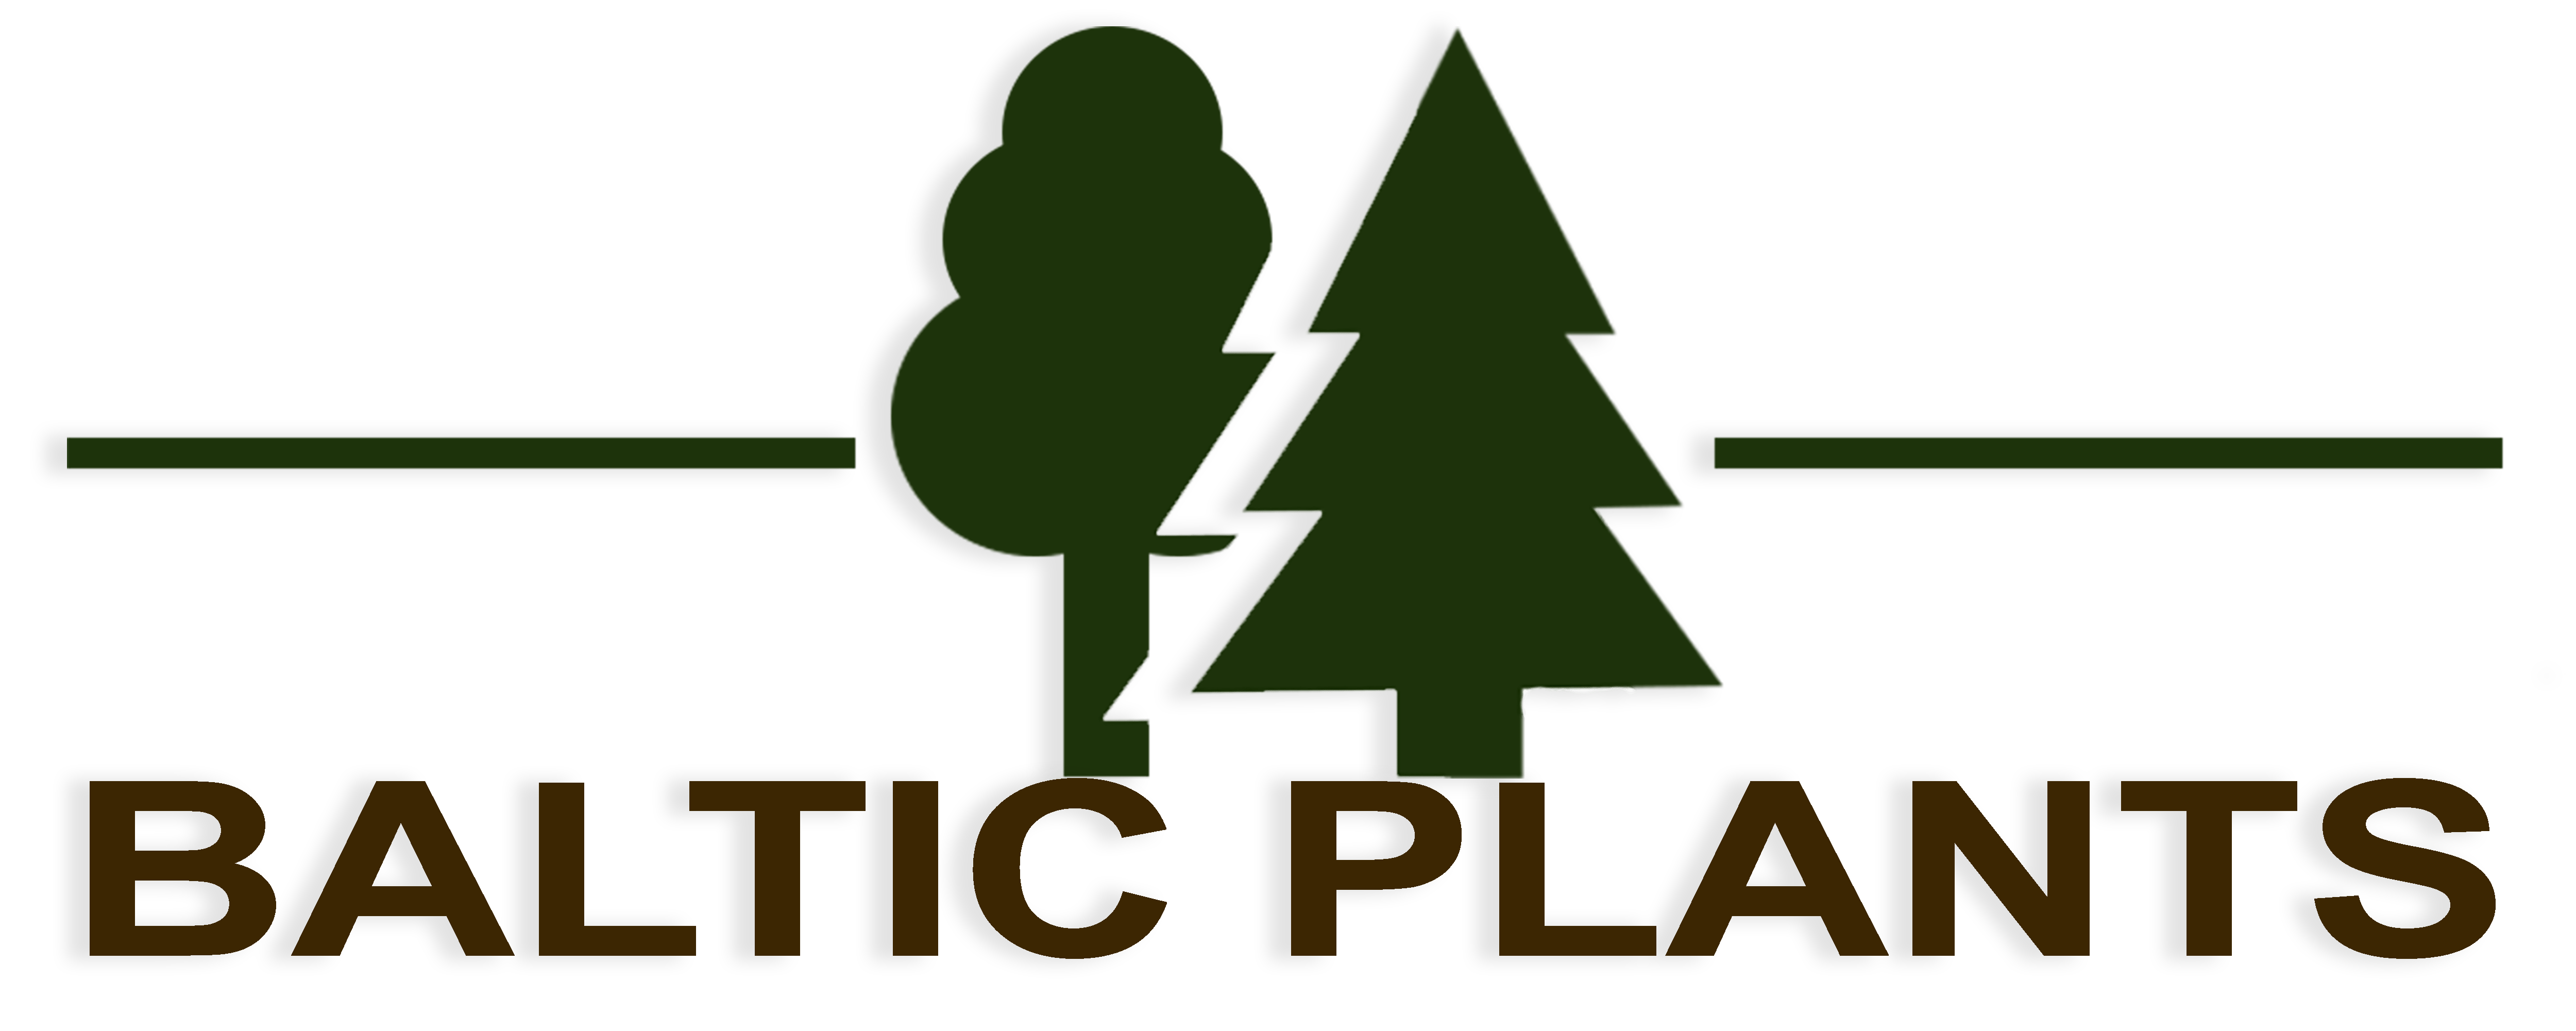 Baltic plants